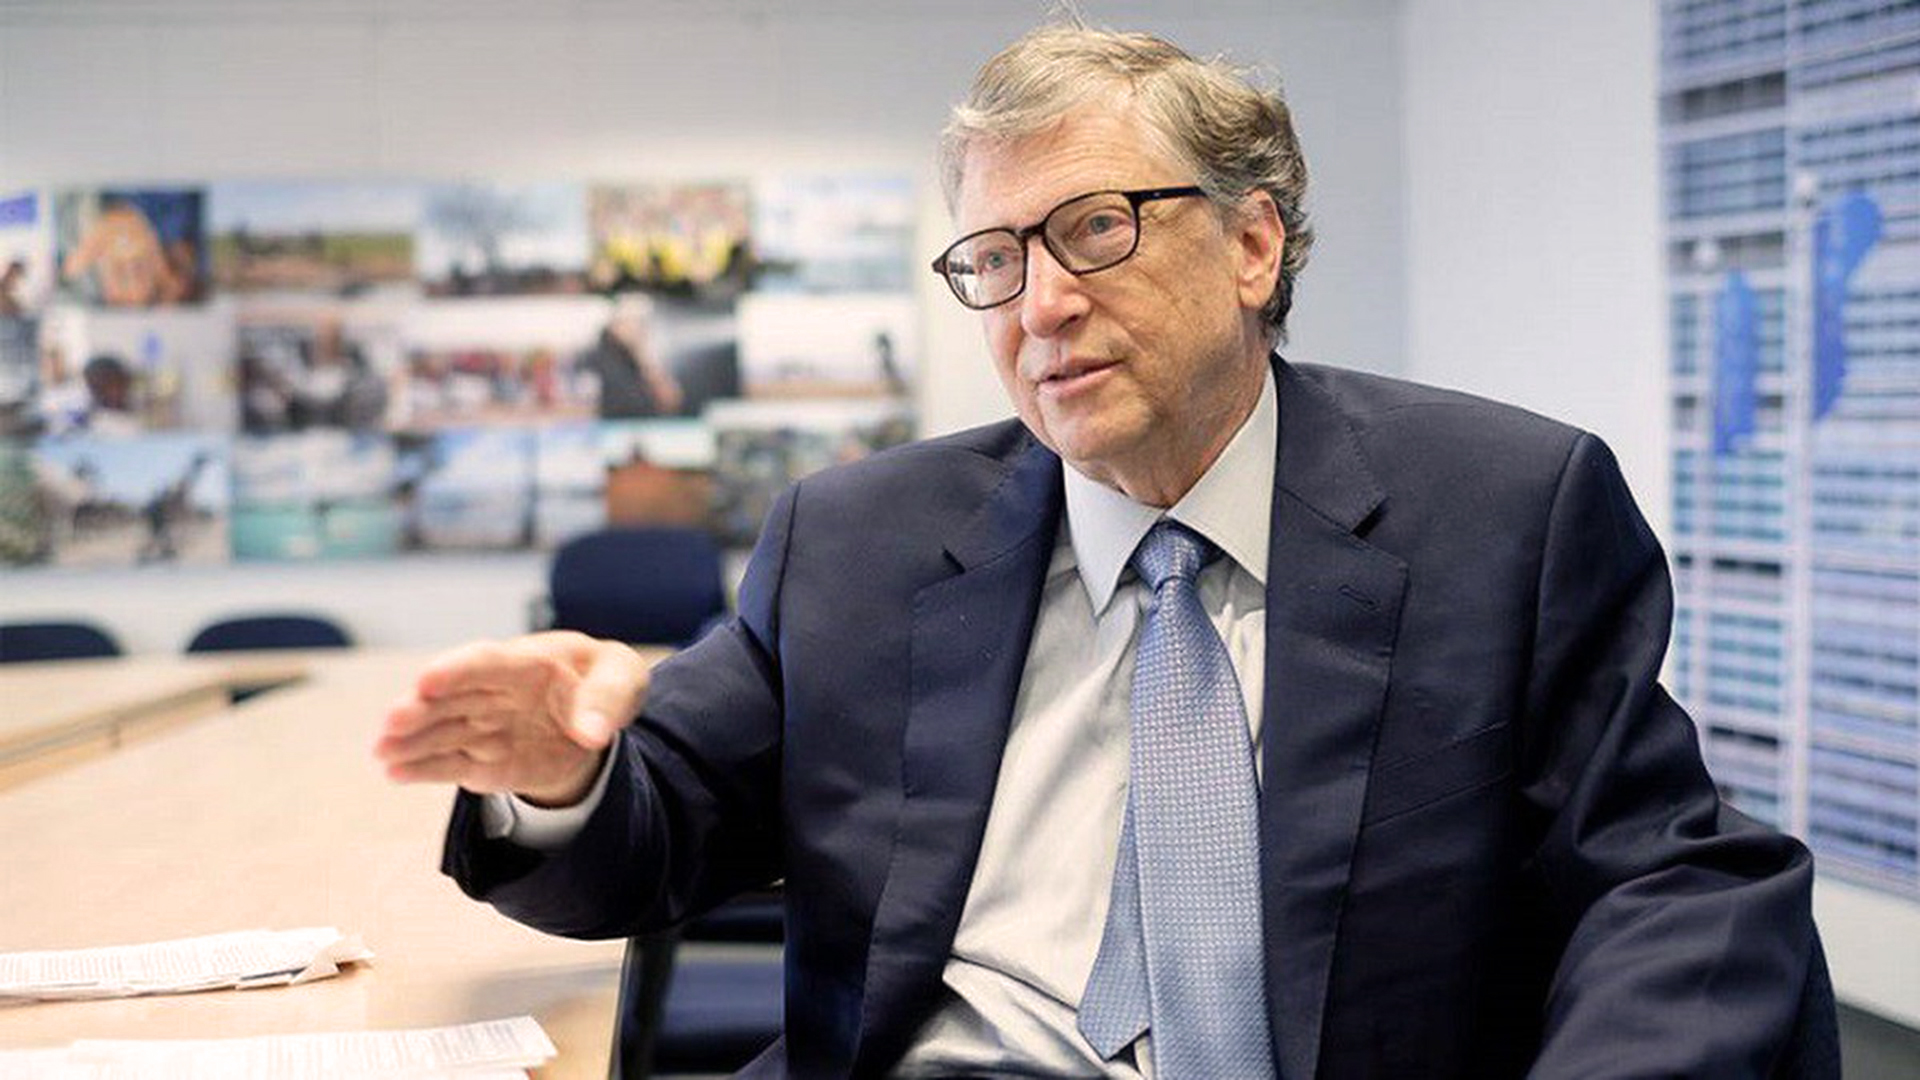 Bill Gates, fundador de Microsoft